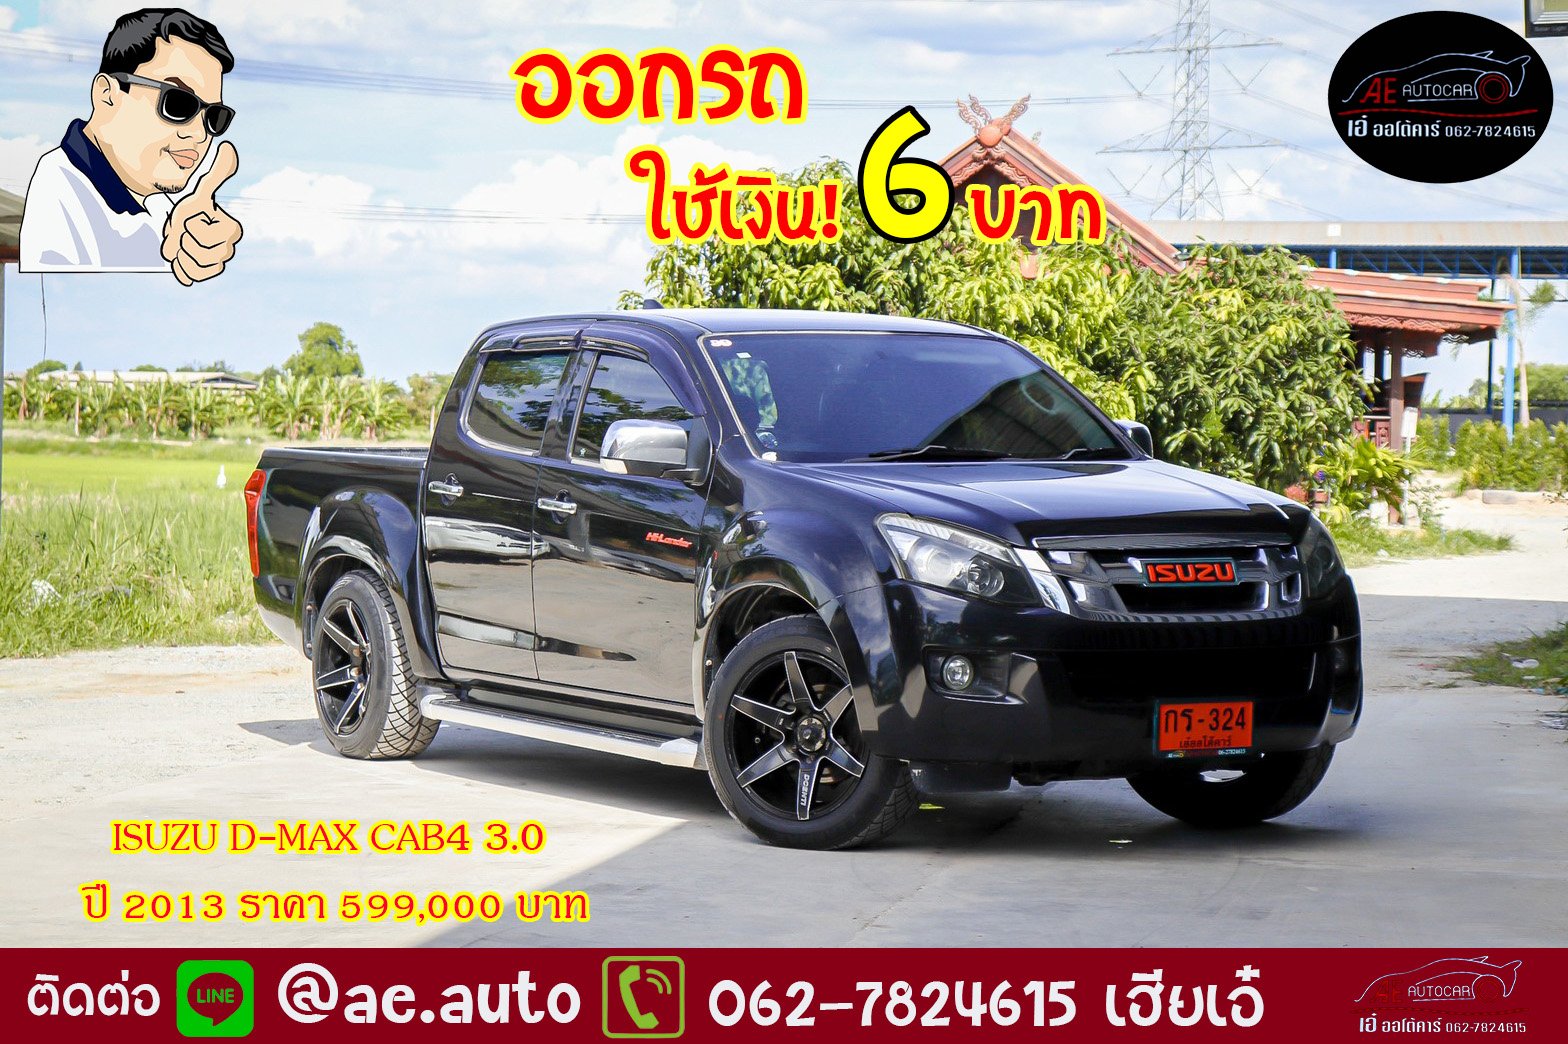 ISUZU D-MAX CAB4 3.0 ปี 2013 ราคา 599,000 บาท